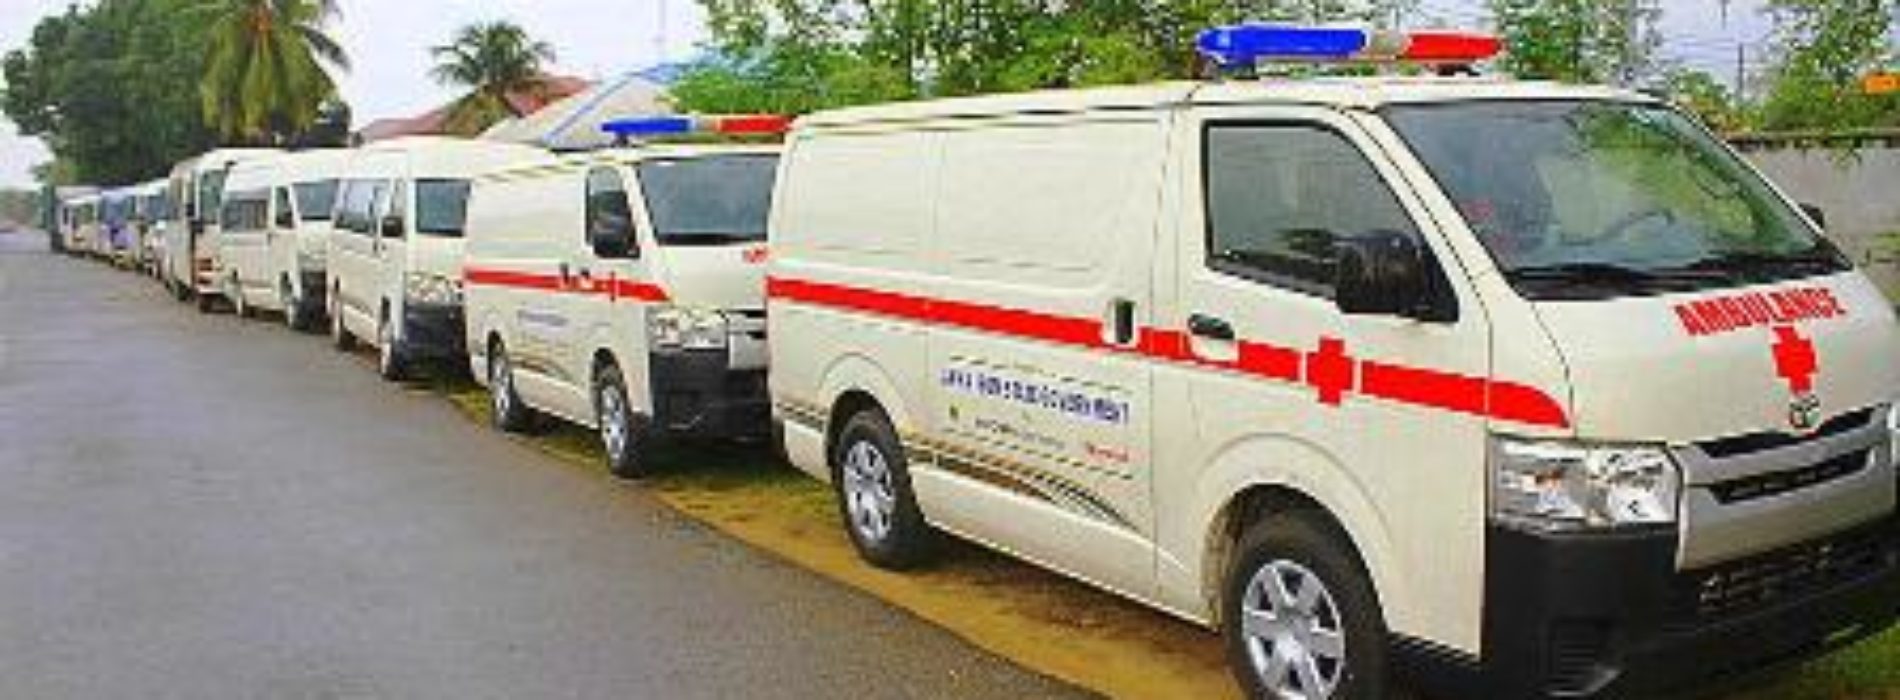 Exxon Mobil donates ambulances, medical supplies to support Nigerian COVID-19 response